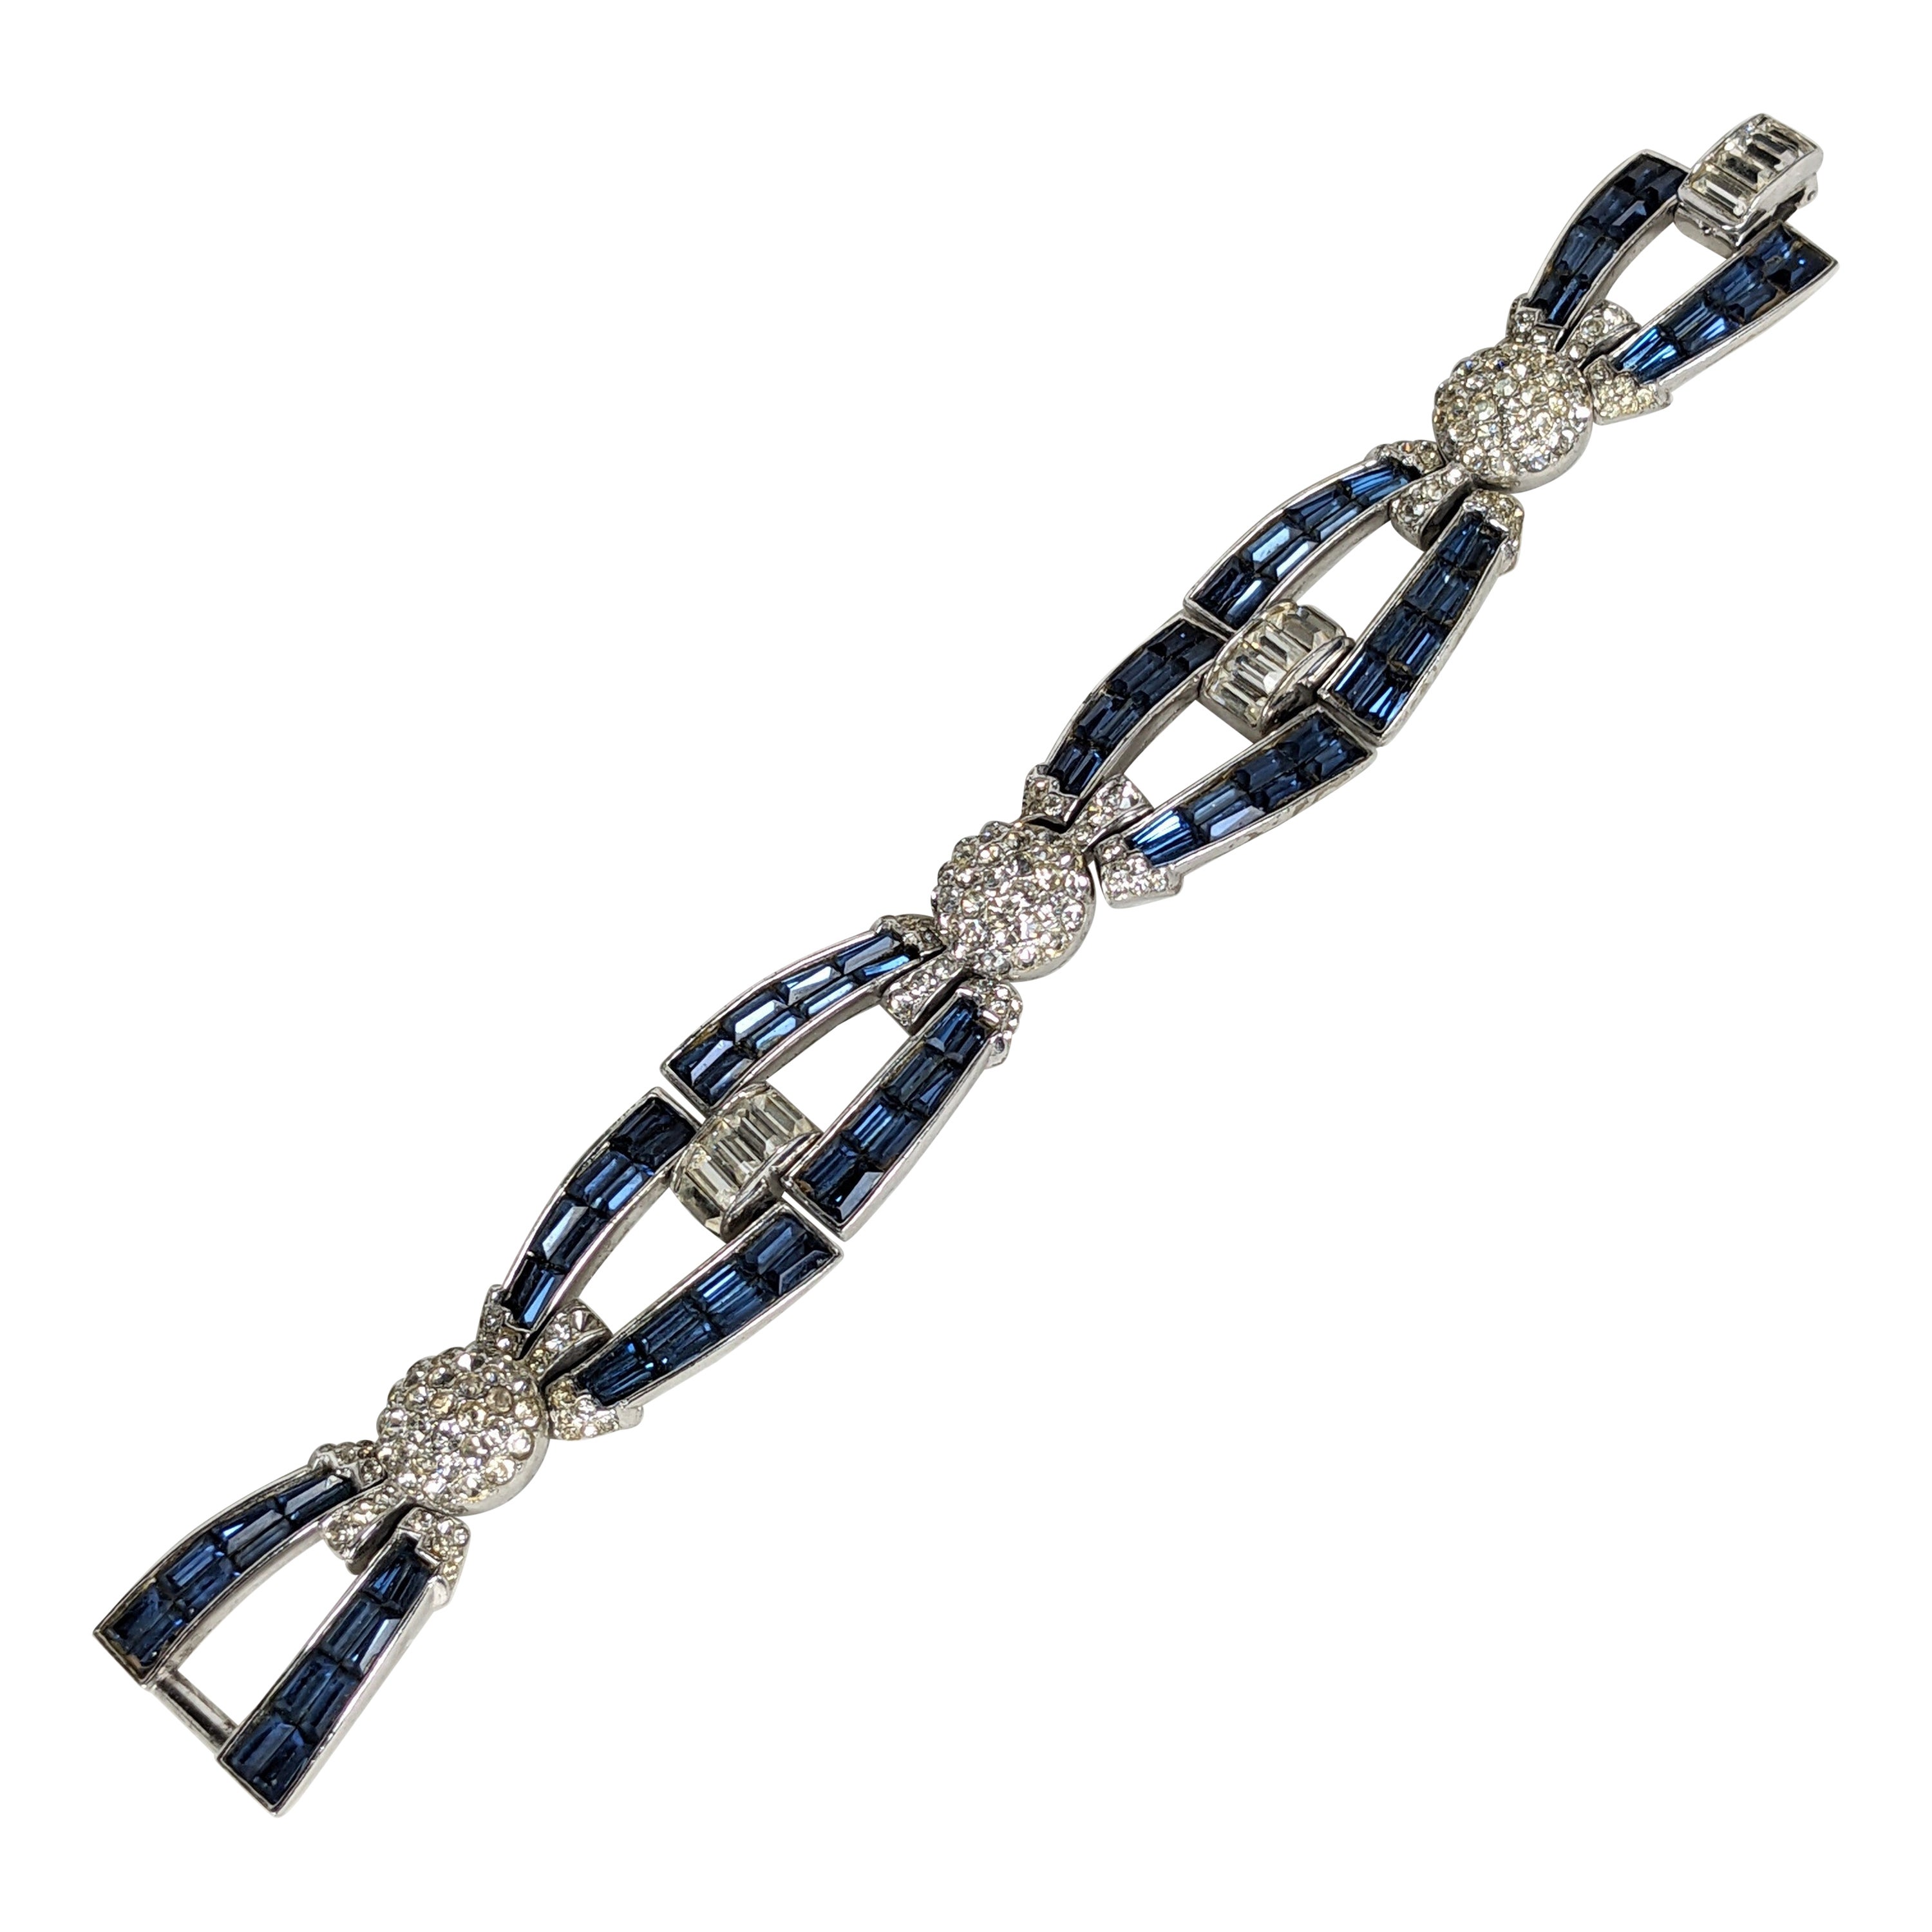  Marcel Boucher Art Deco Baguette Link Bracelet